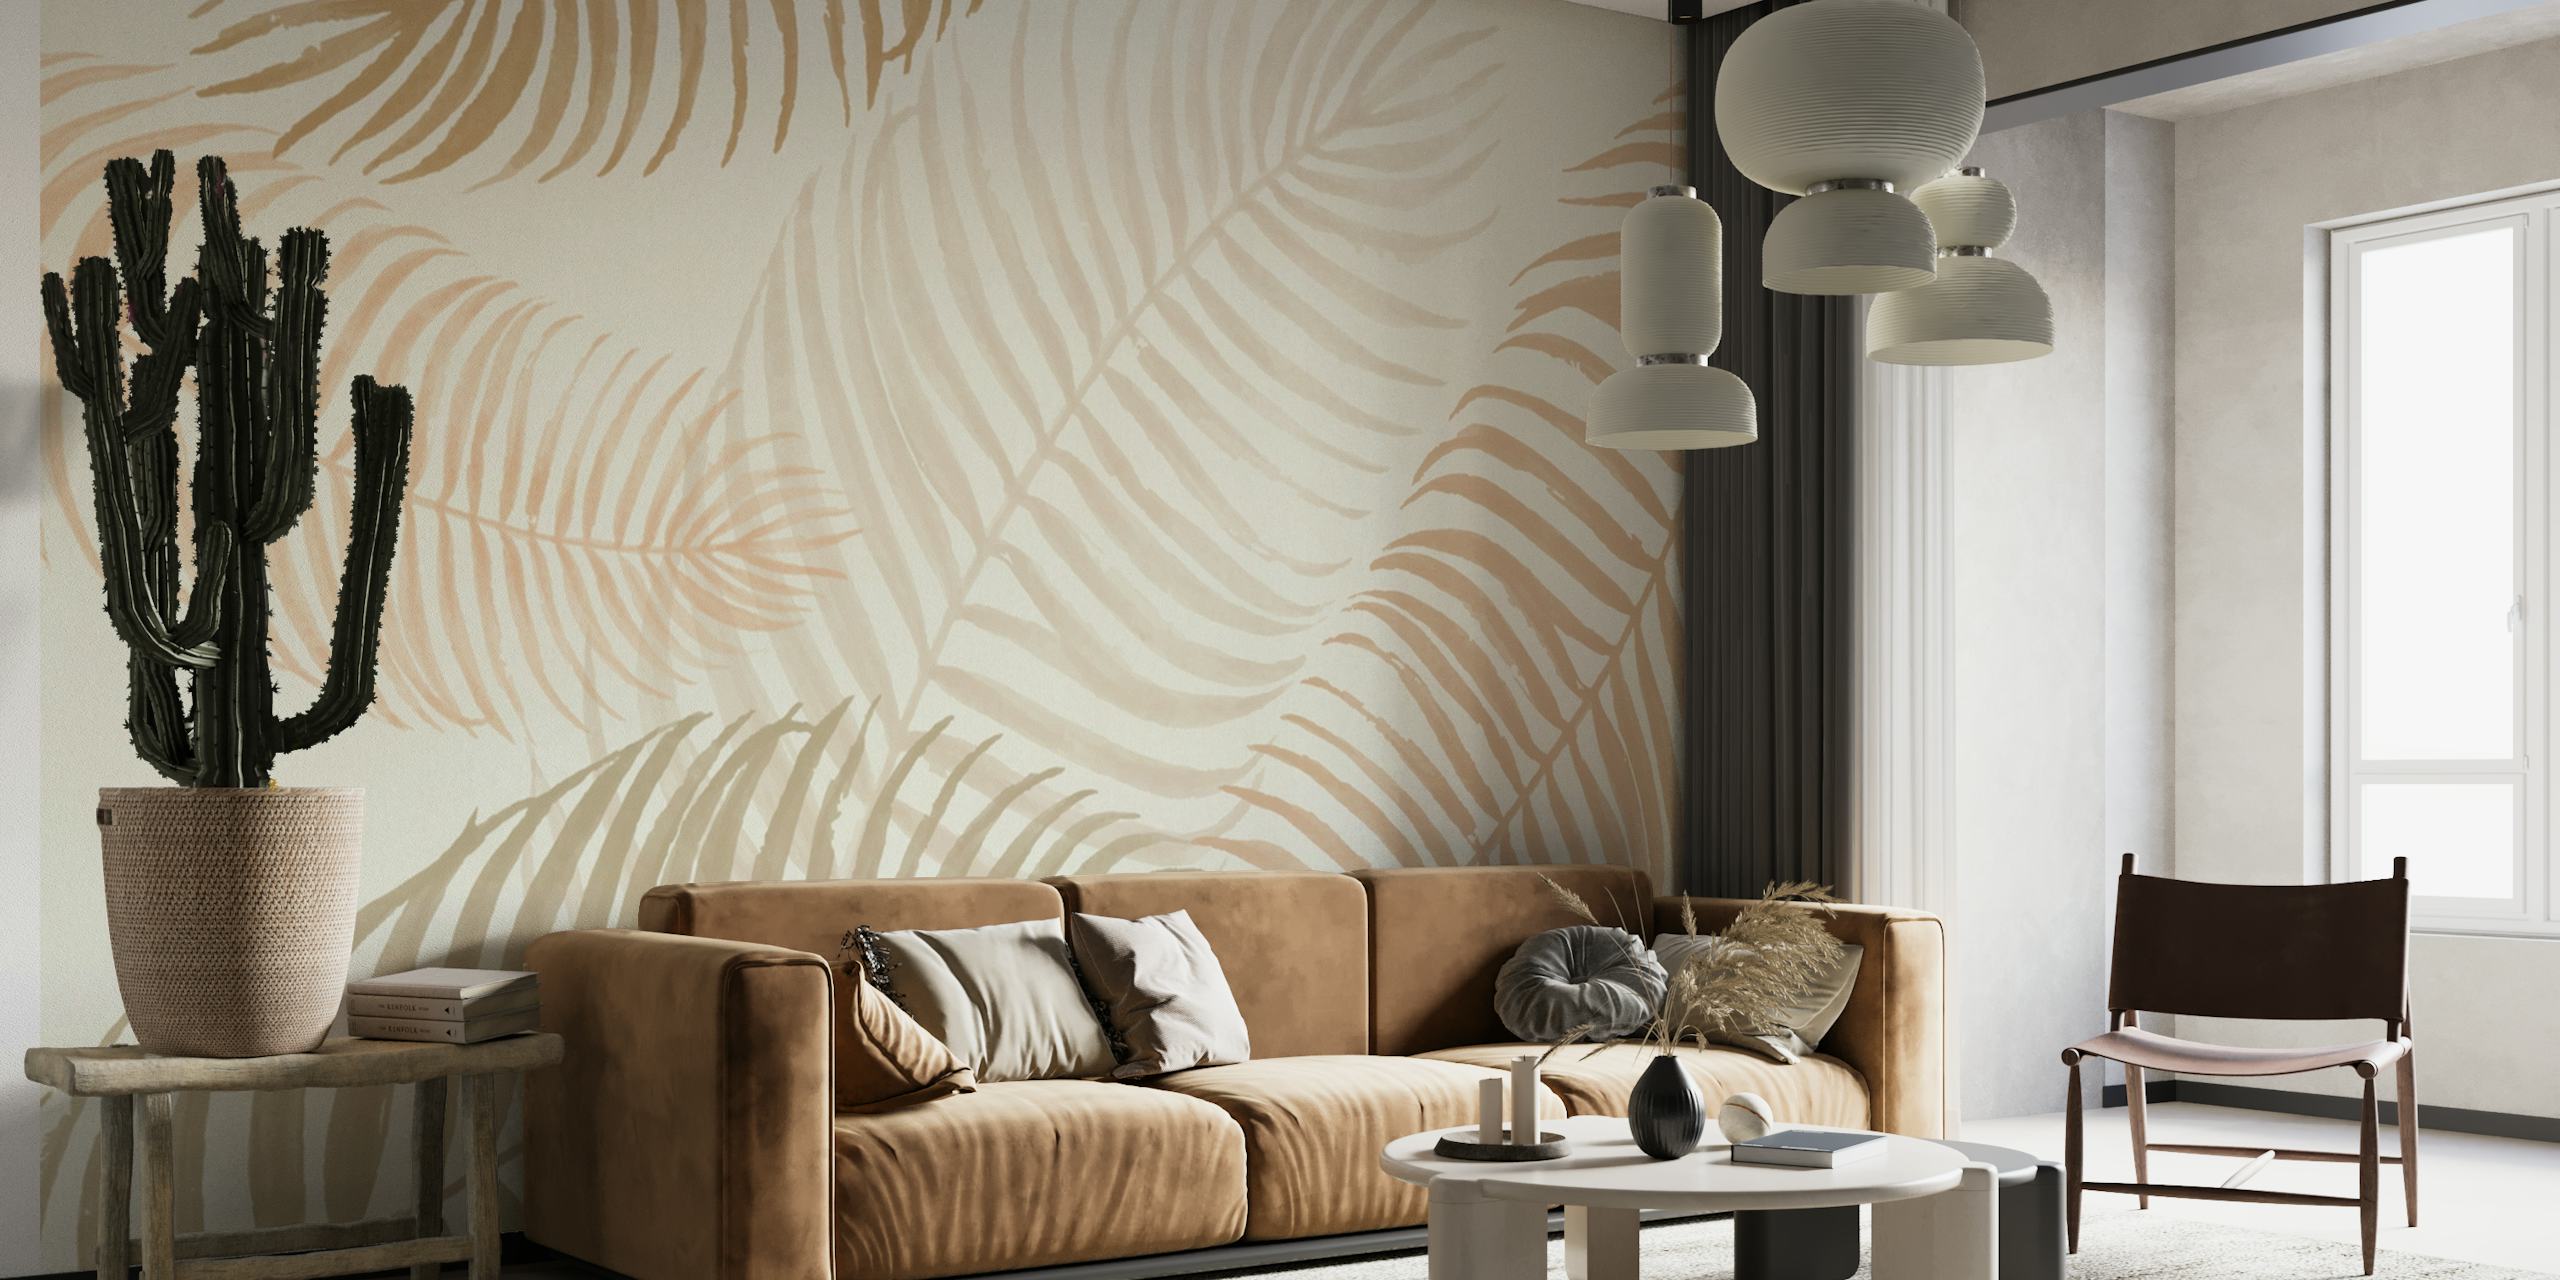 Neutral Palm Leaves wallpaper